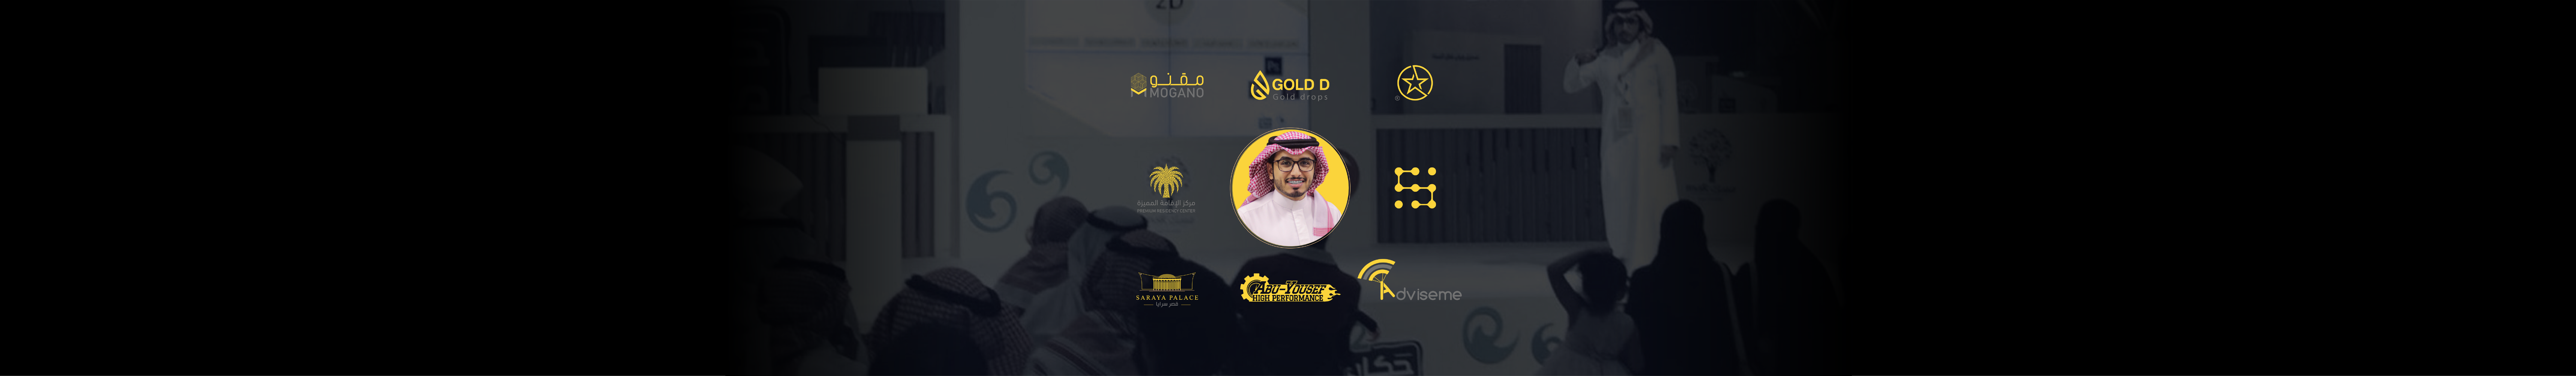 Fahad 4art's profile banner